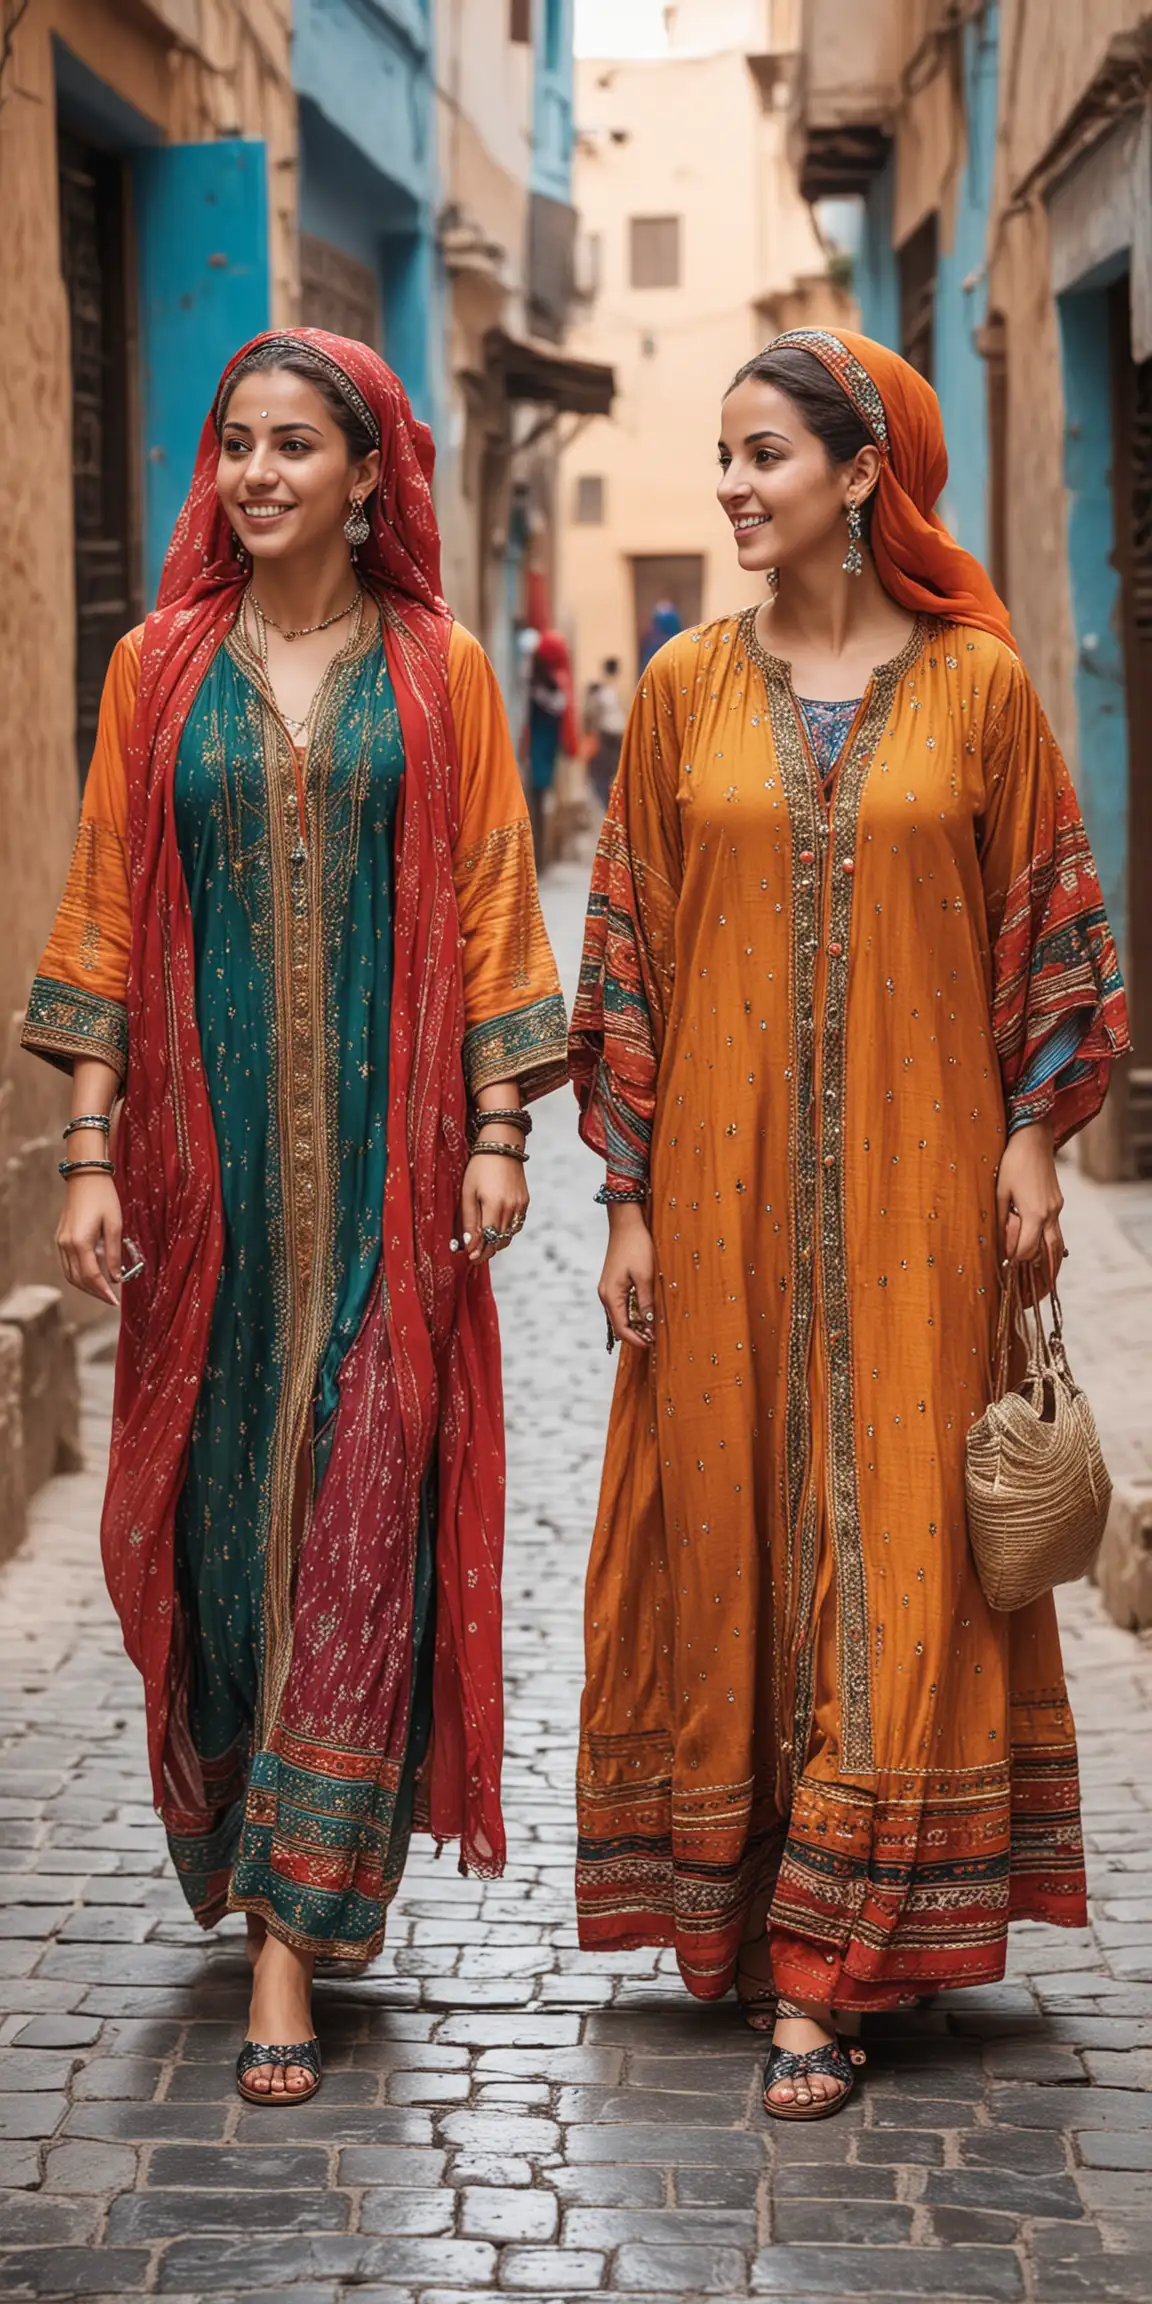 2 Moroccan women  intraditional street dress, profile, full figure